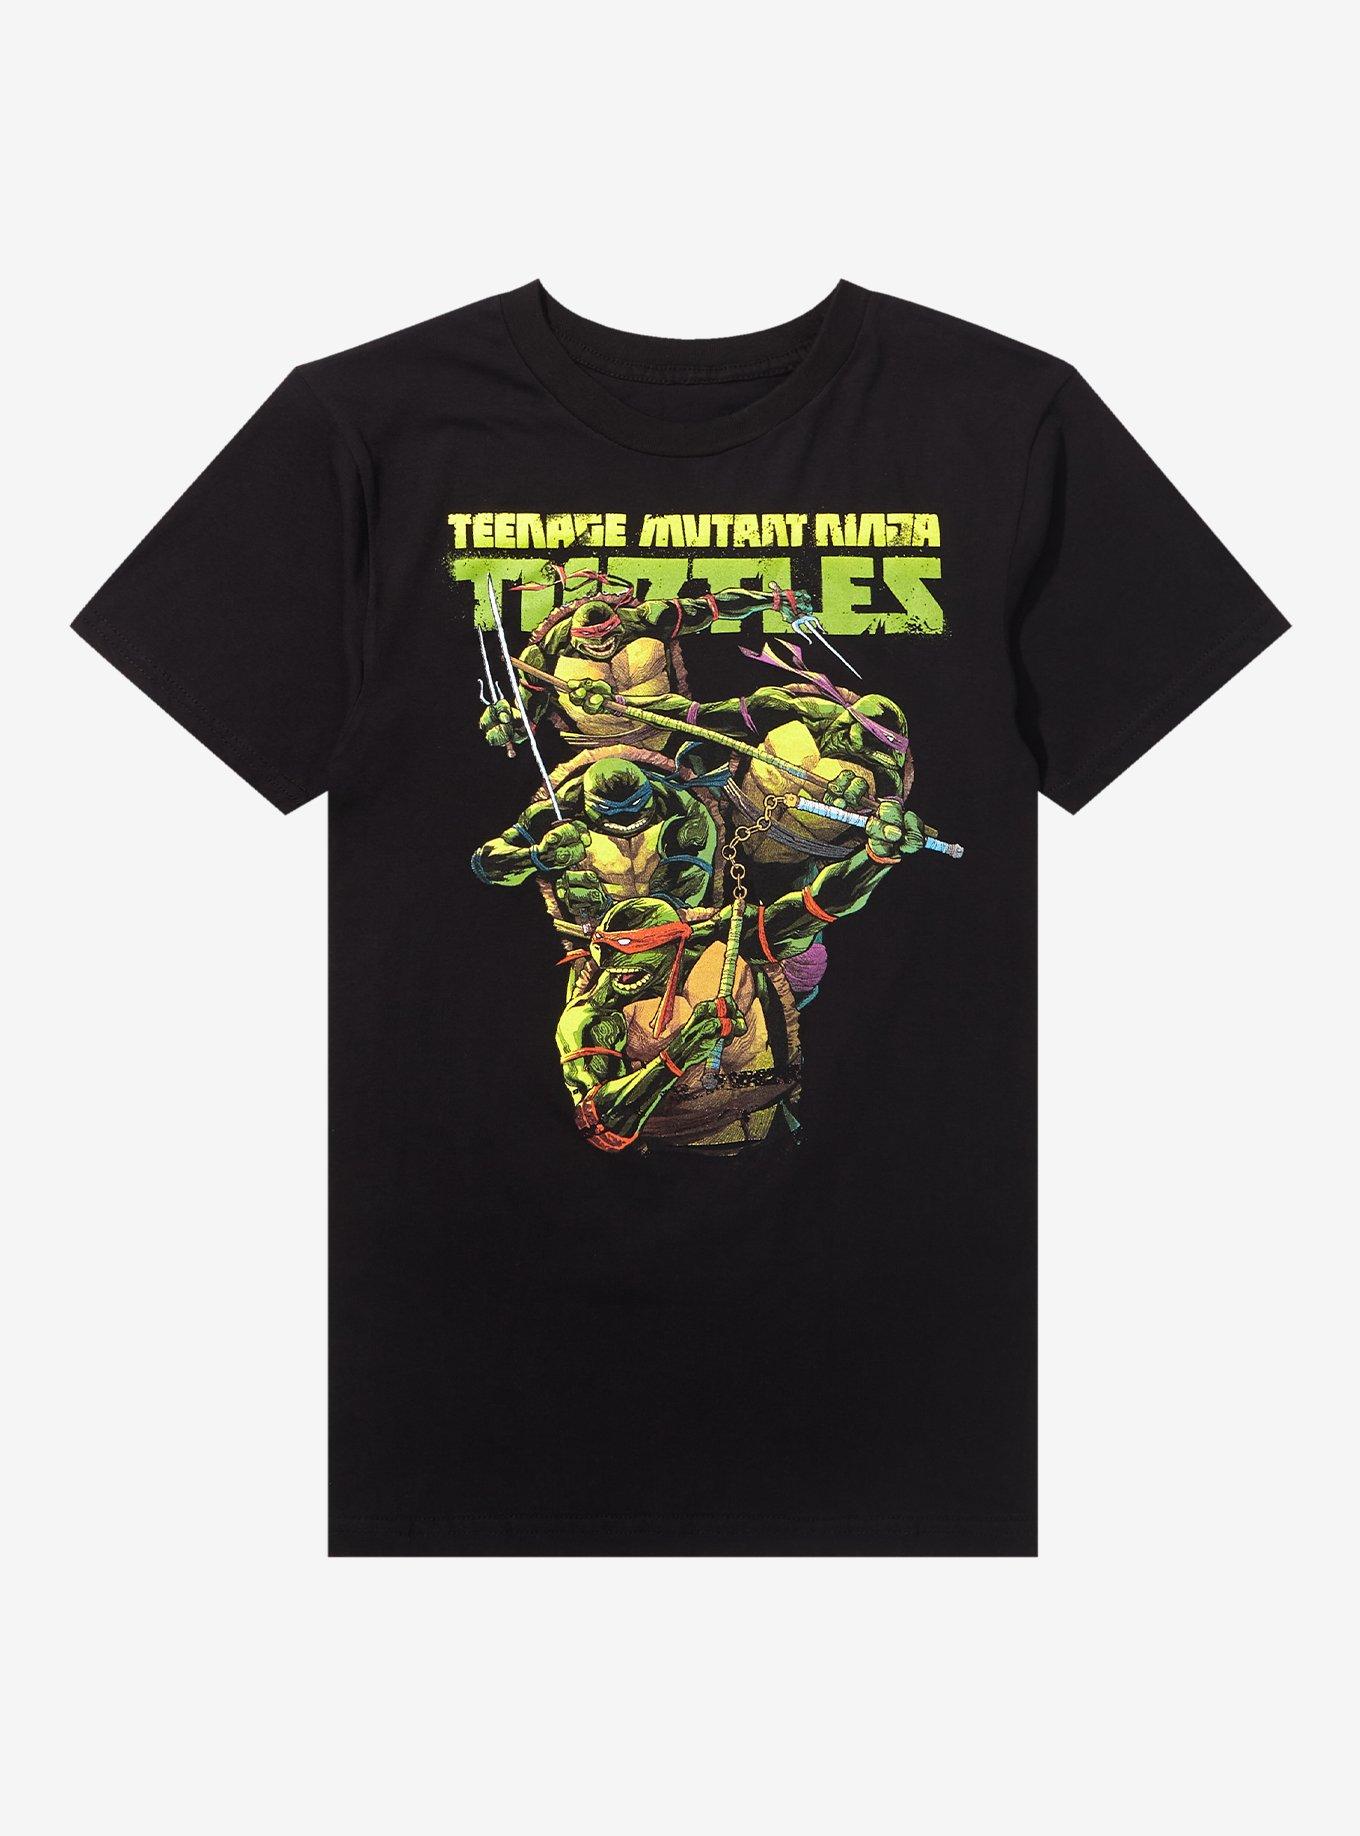 Teenage Mutant Ninja Turtles Group T-Shirt | Hot Topic